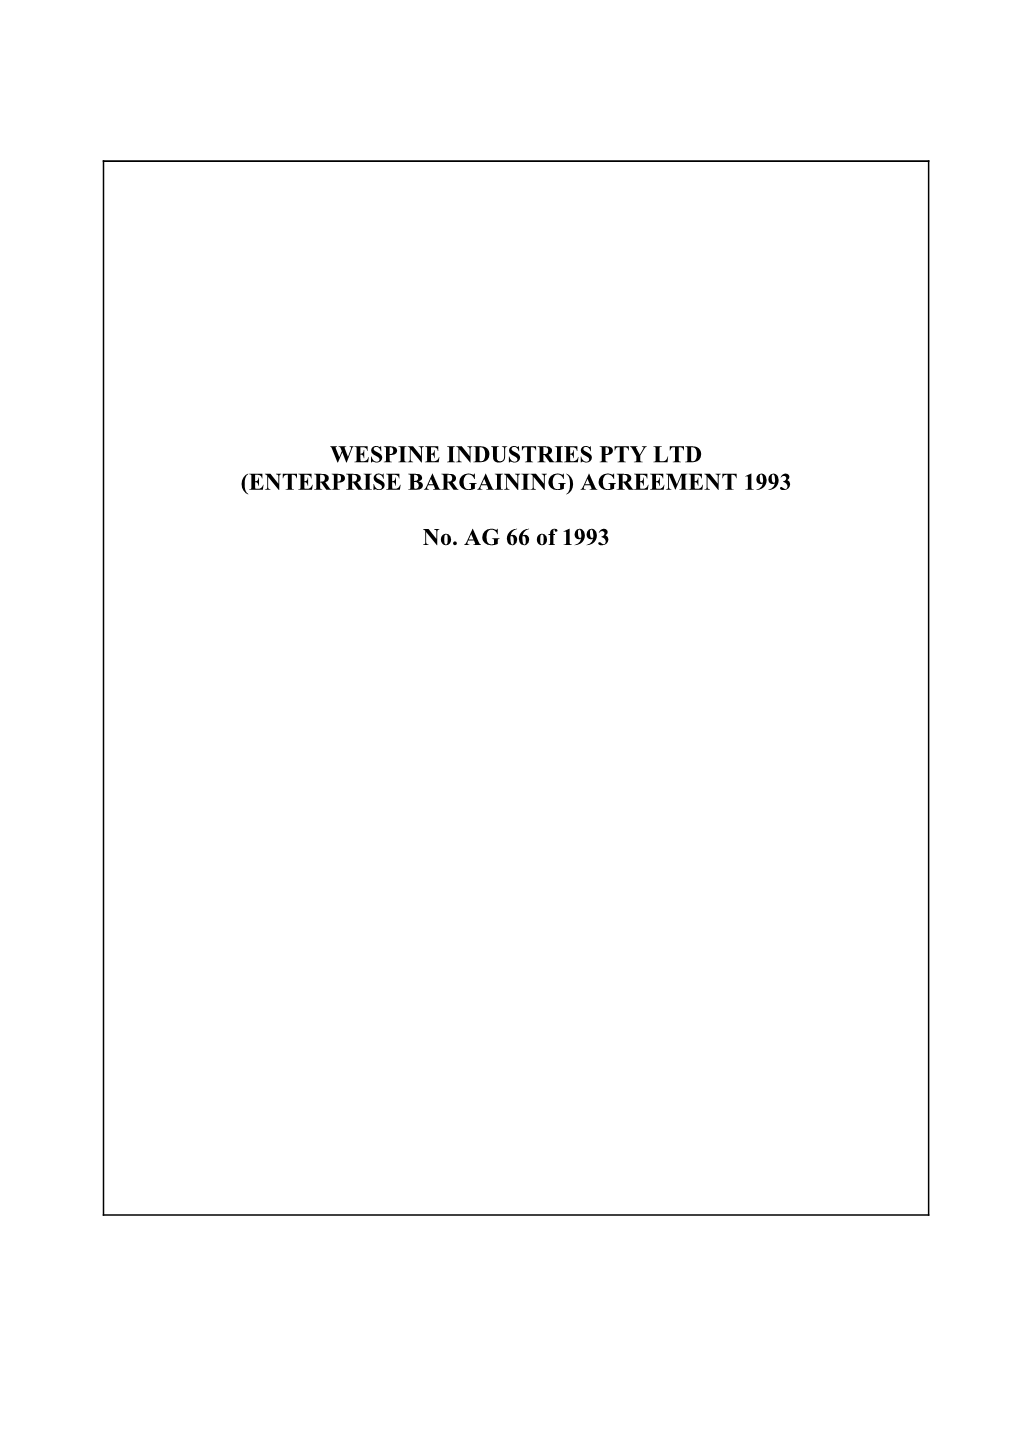 Wespine Industries Pty Ltd (Enterprise Bargaining) Agreement 1993